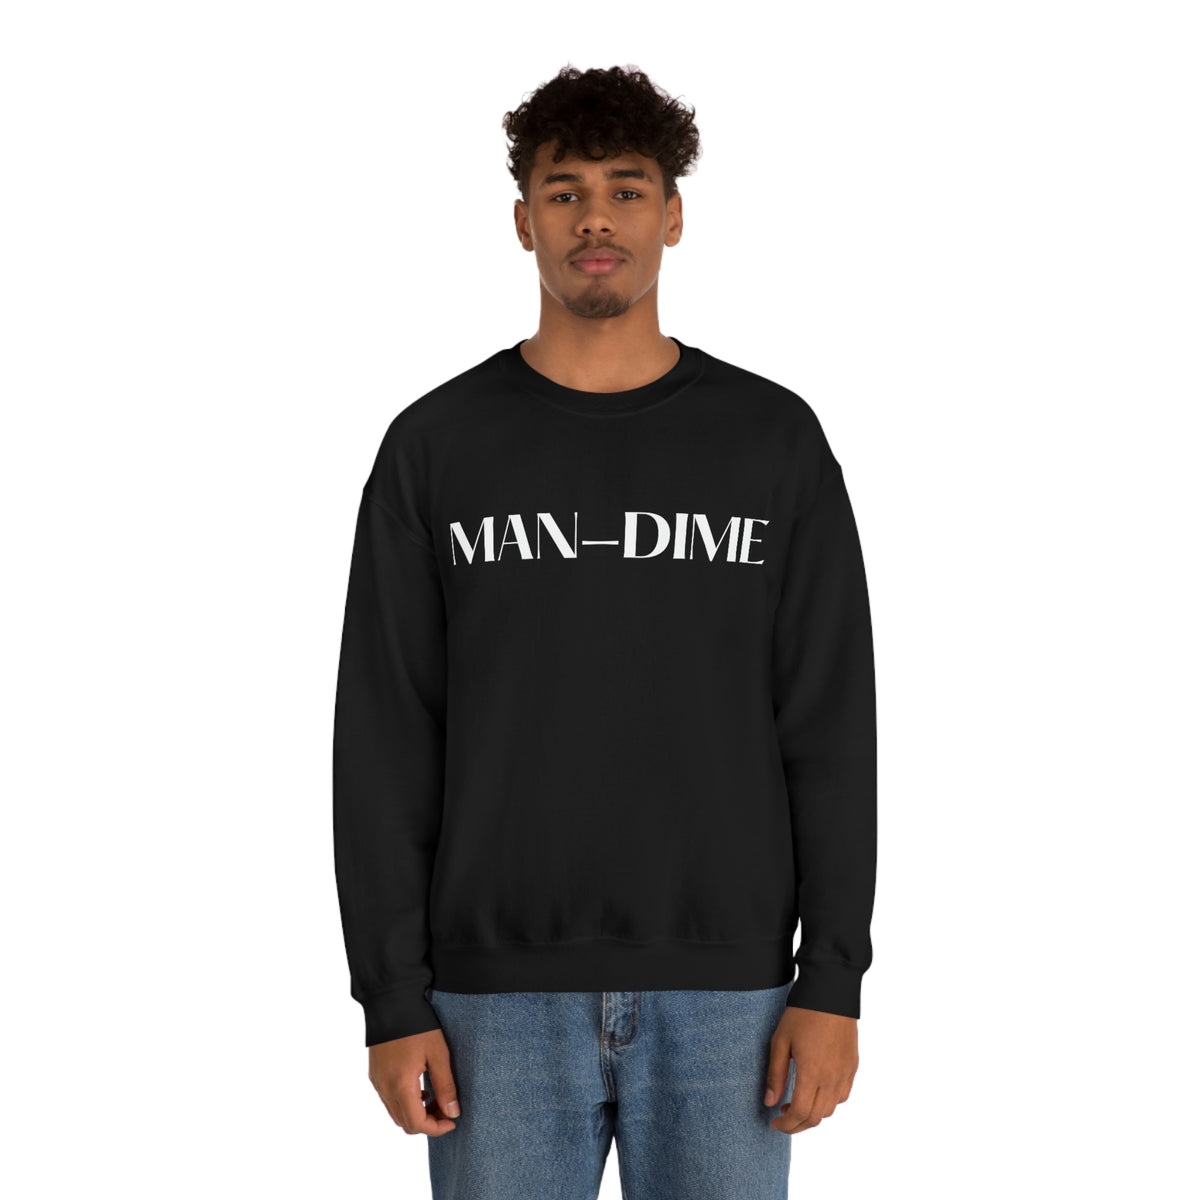 Man-Dime Crewneck, Man Dime Pullover, 10/10 for Men Sweatshirt, Male Energy Sweatshirt, Dimes Top